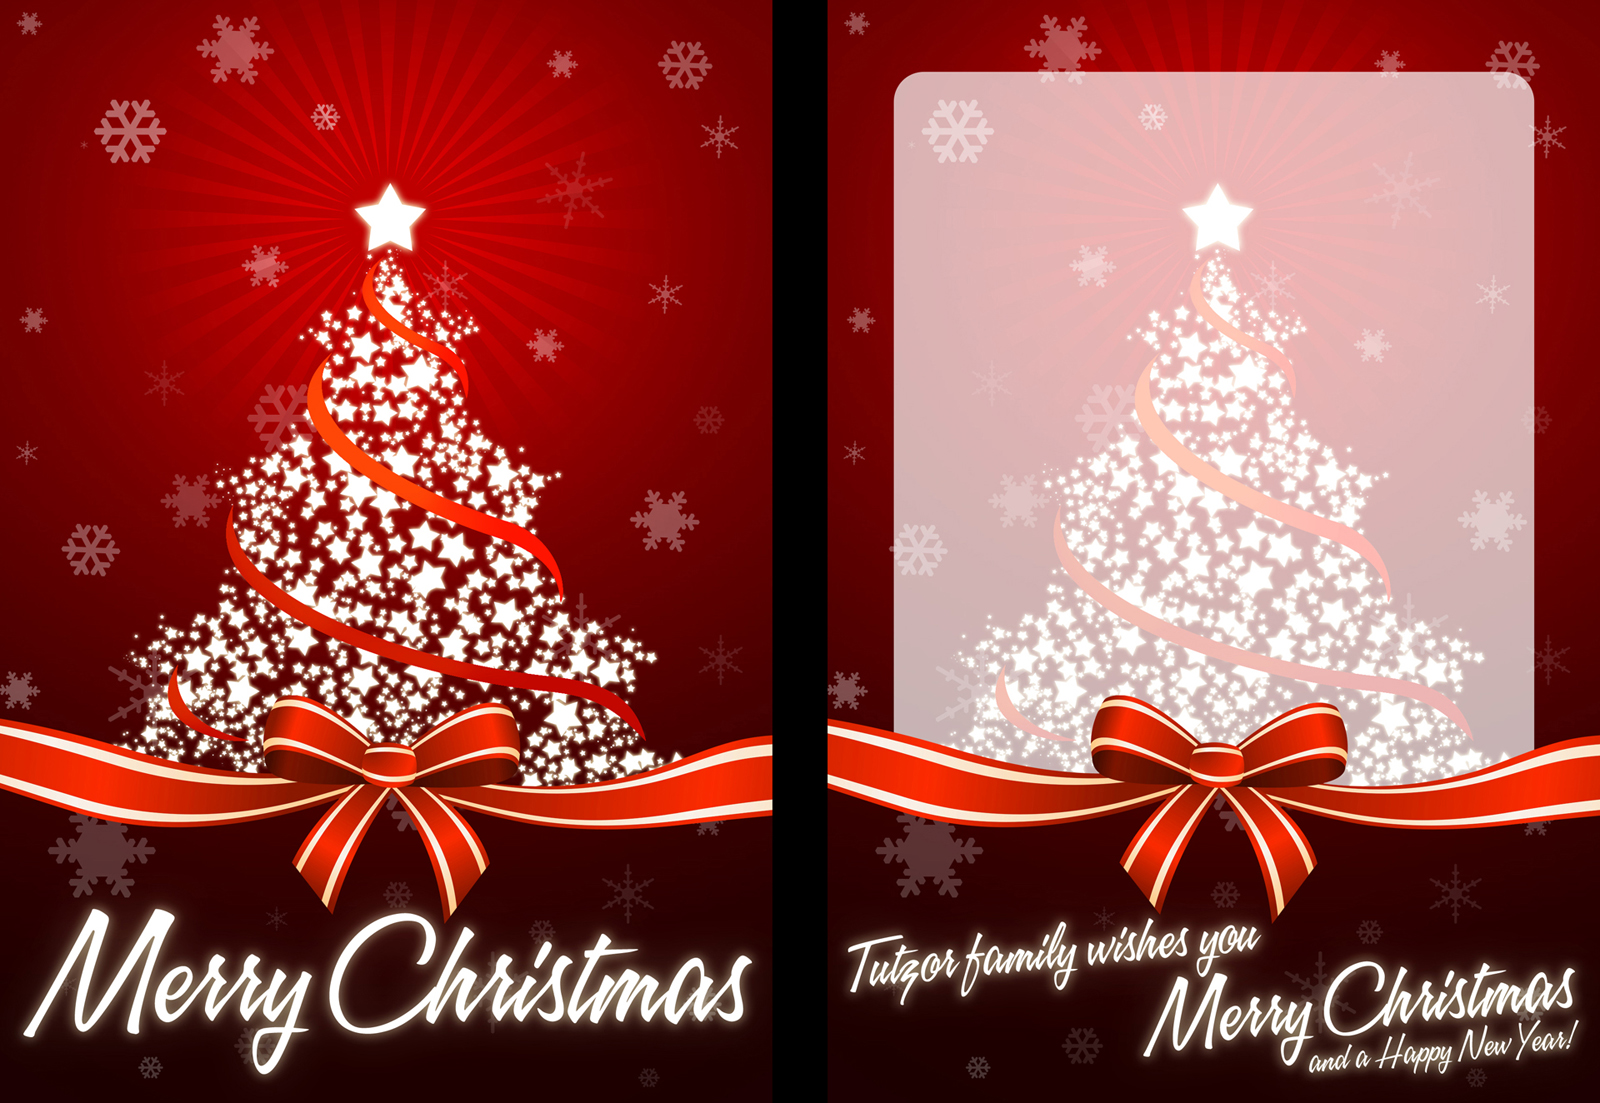 Christmas Wishes Photos Cards  christmaswishes123